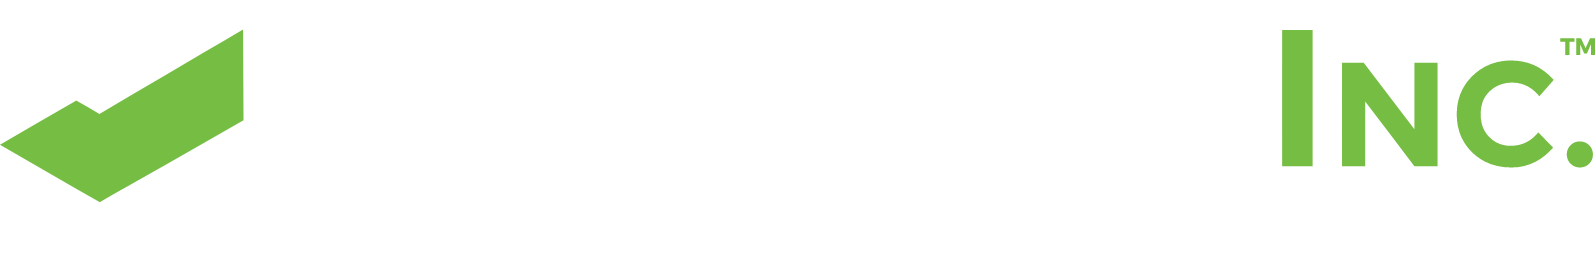 HireQuest logo large for dark backgrounds (transparent PNG)